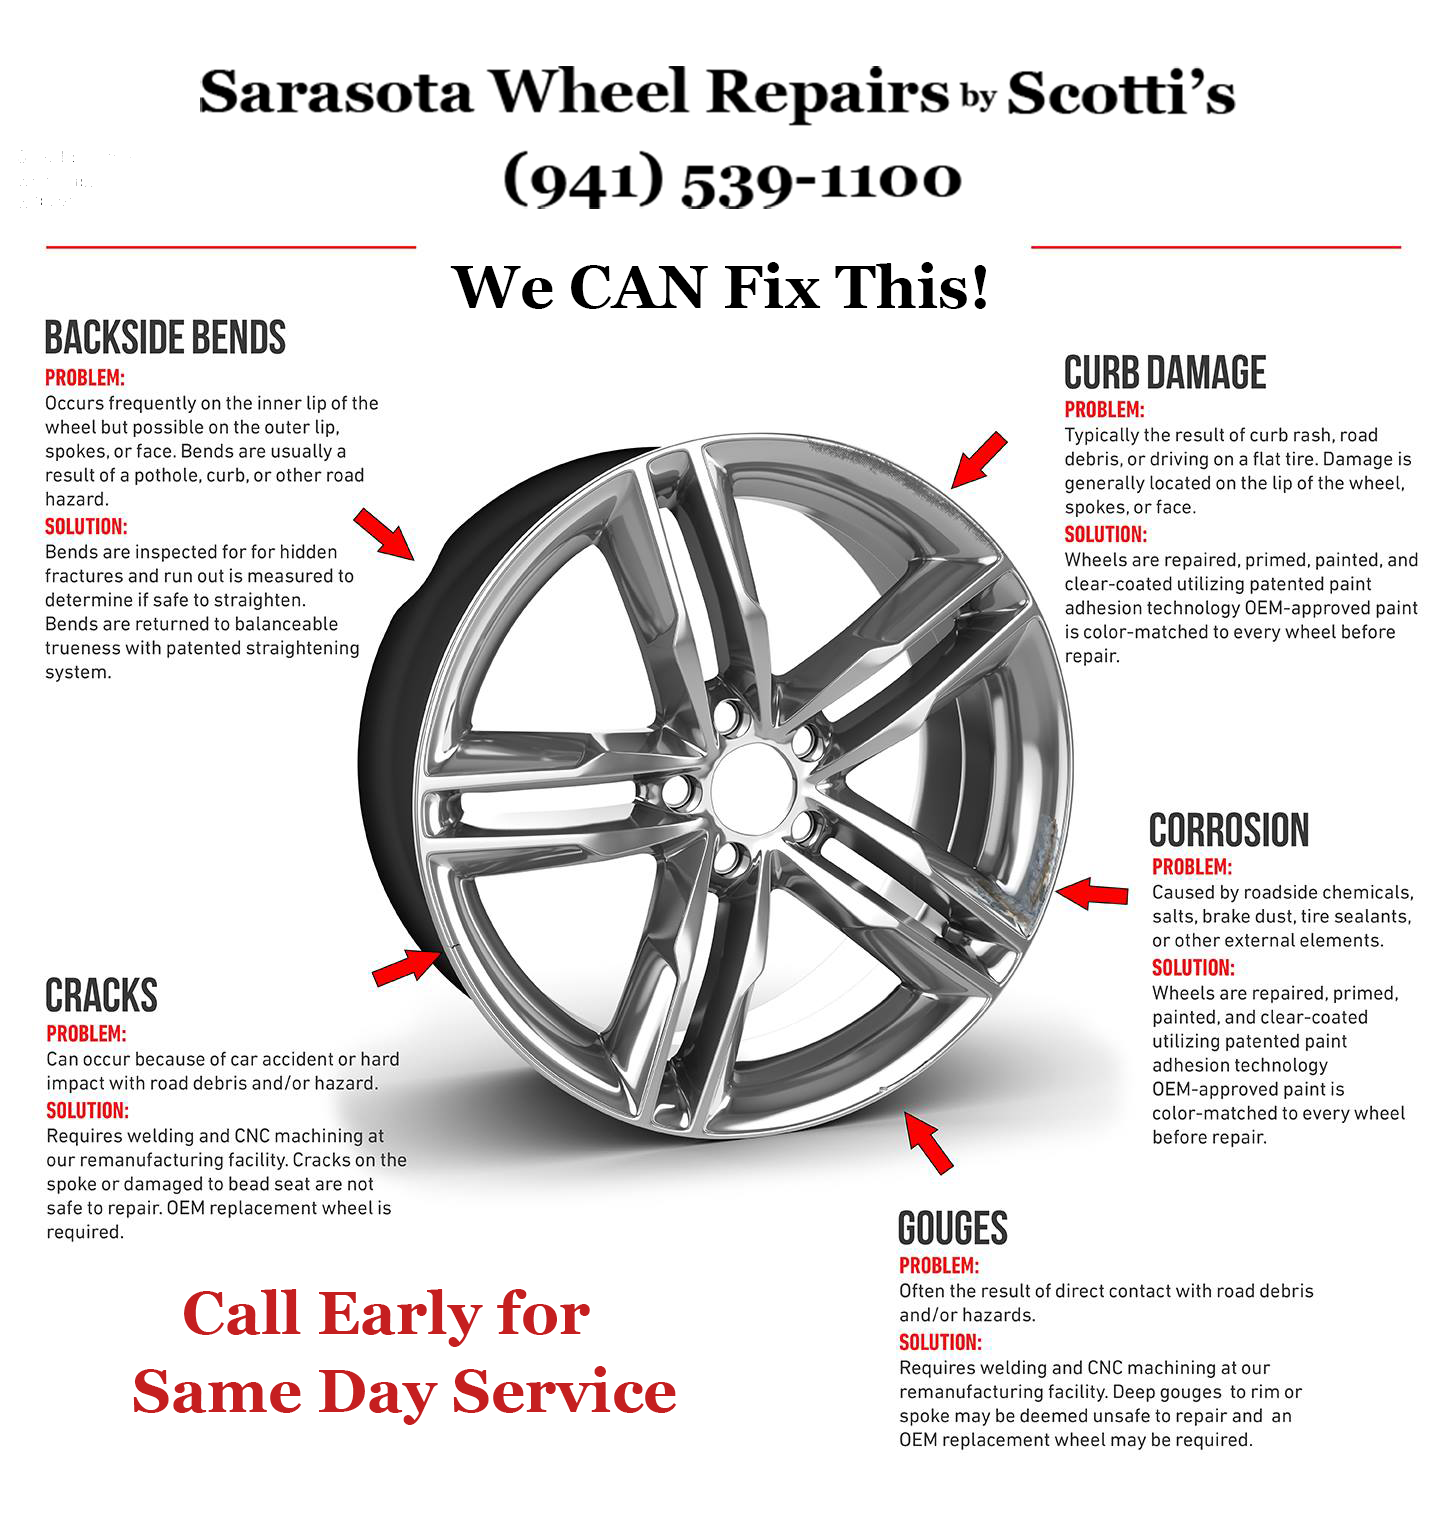 Types of Wheel Repairs